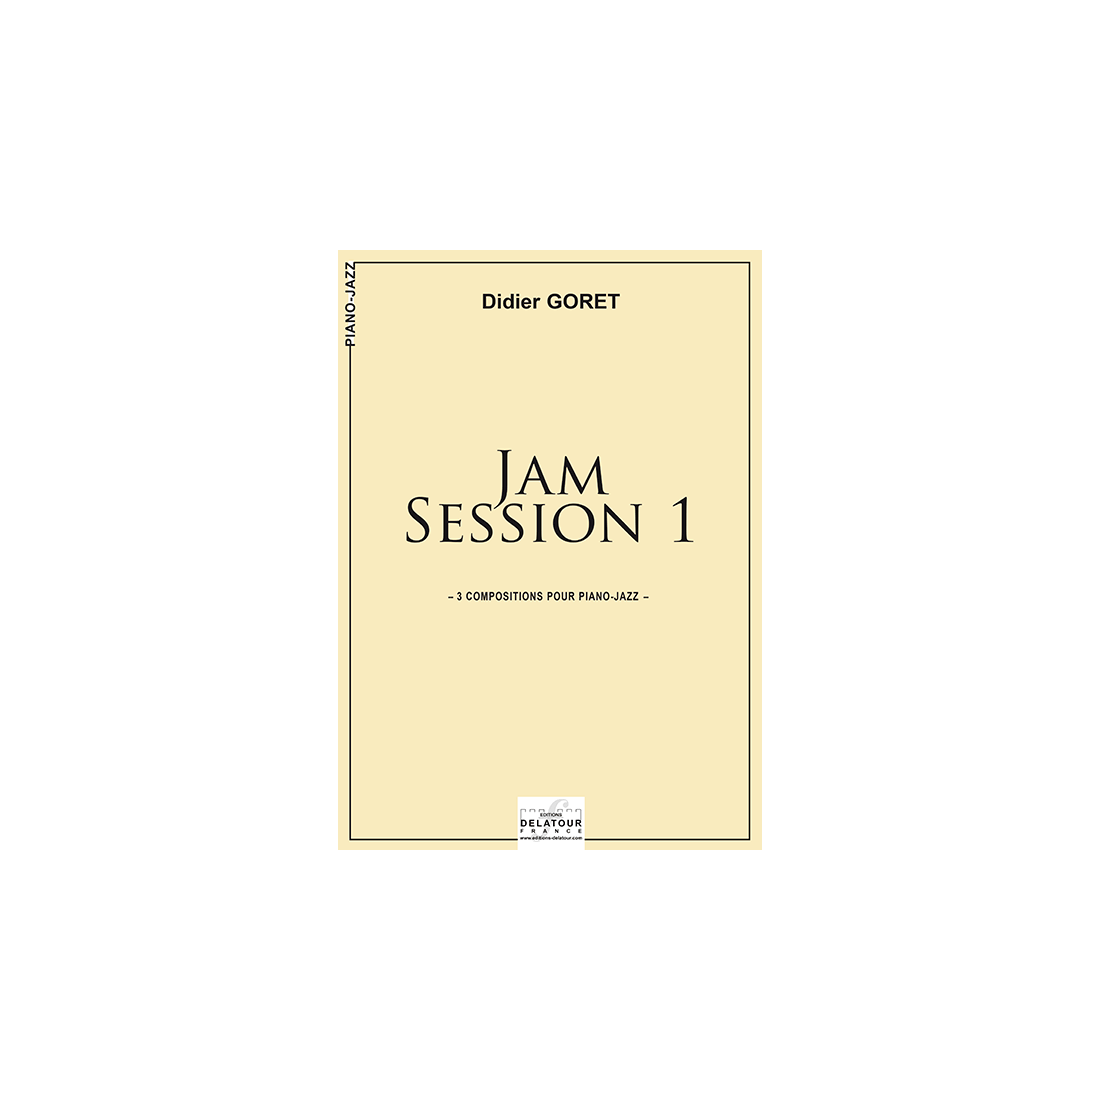 Jam session - Vol. 1 pour piano-jazz